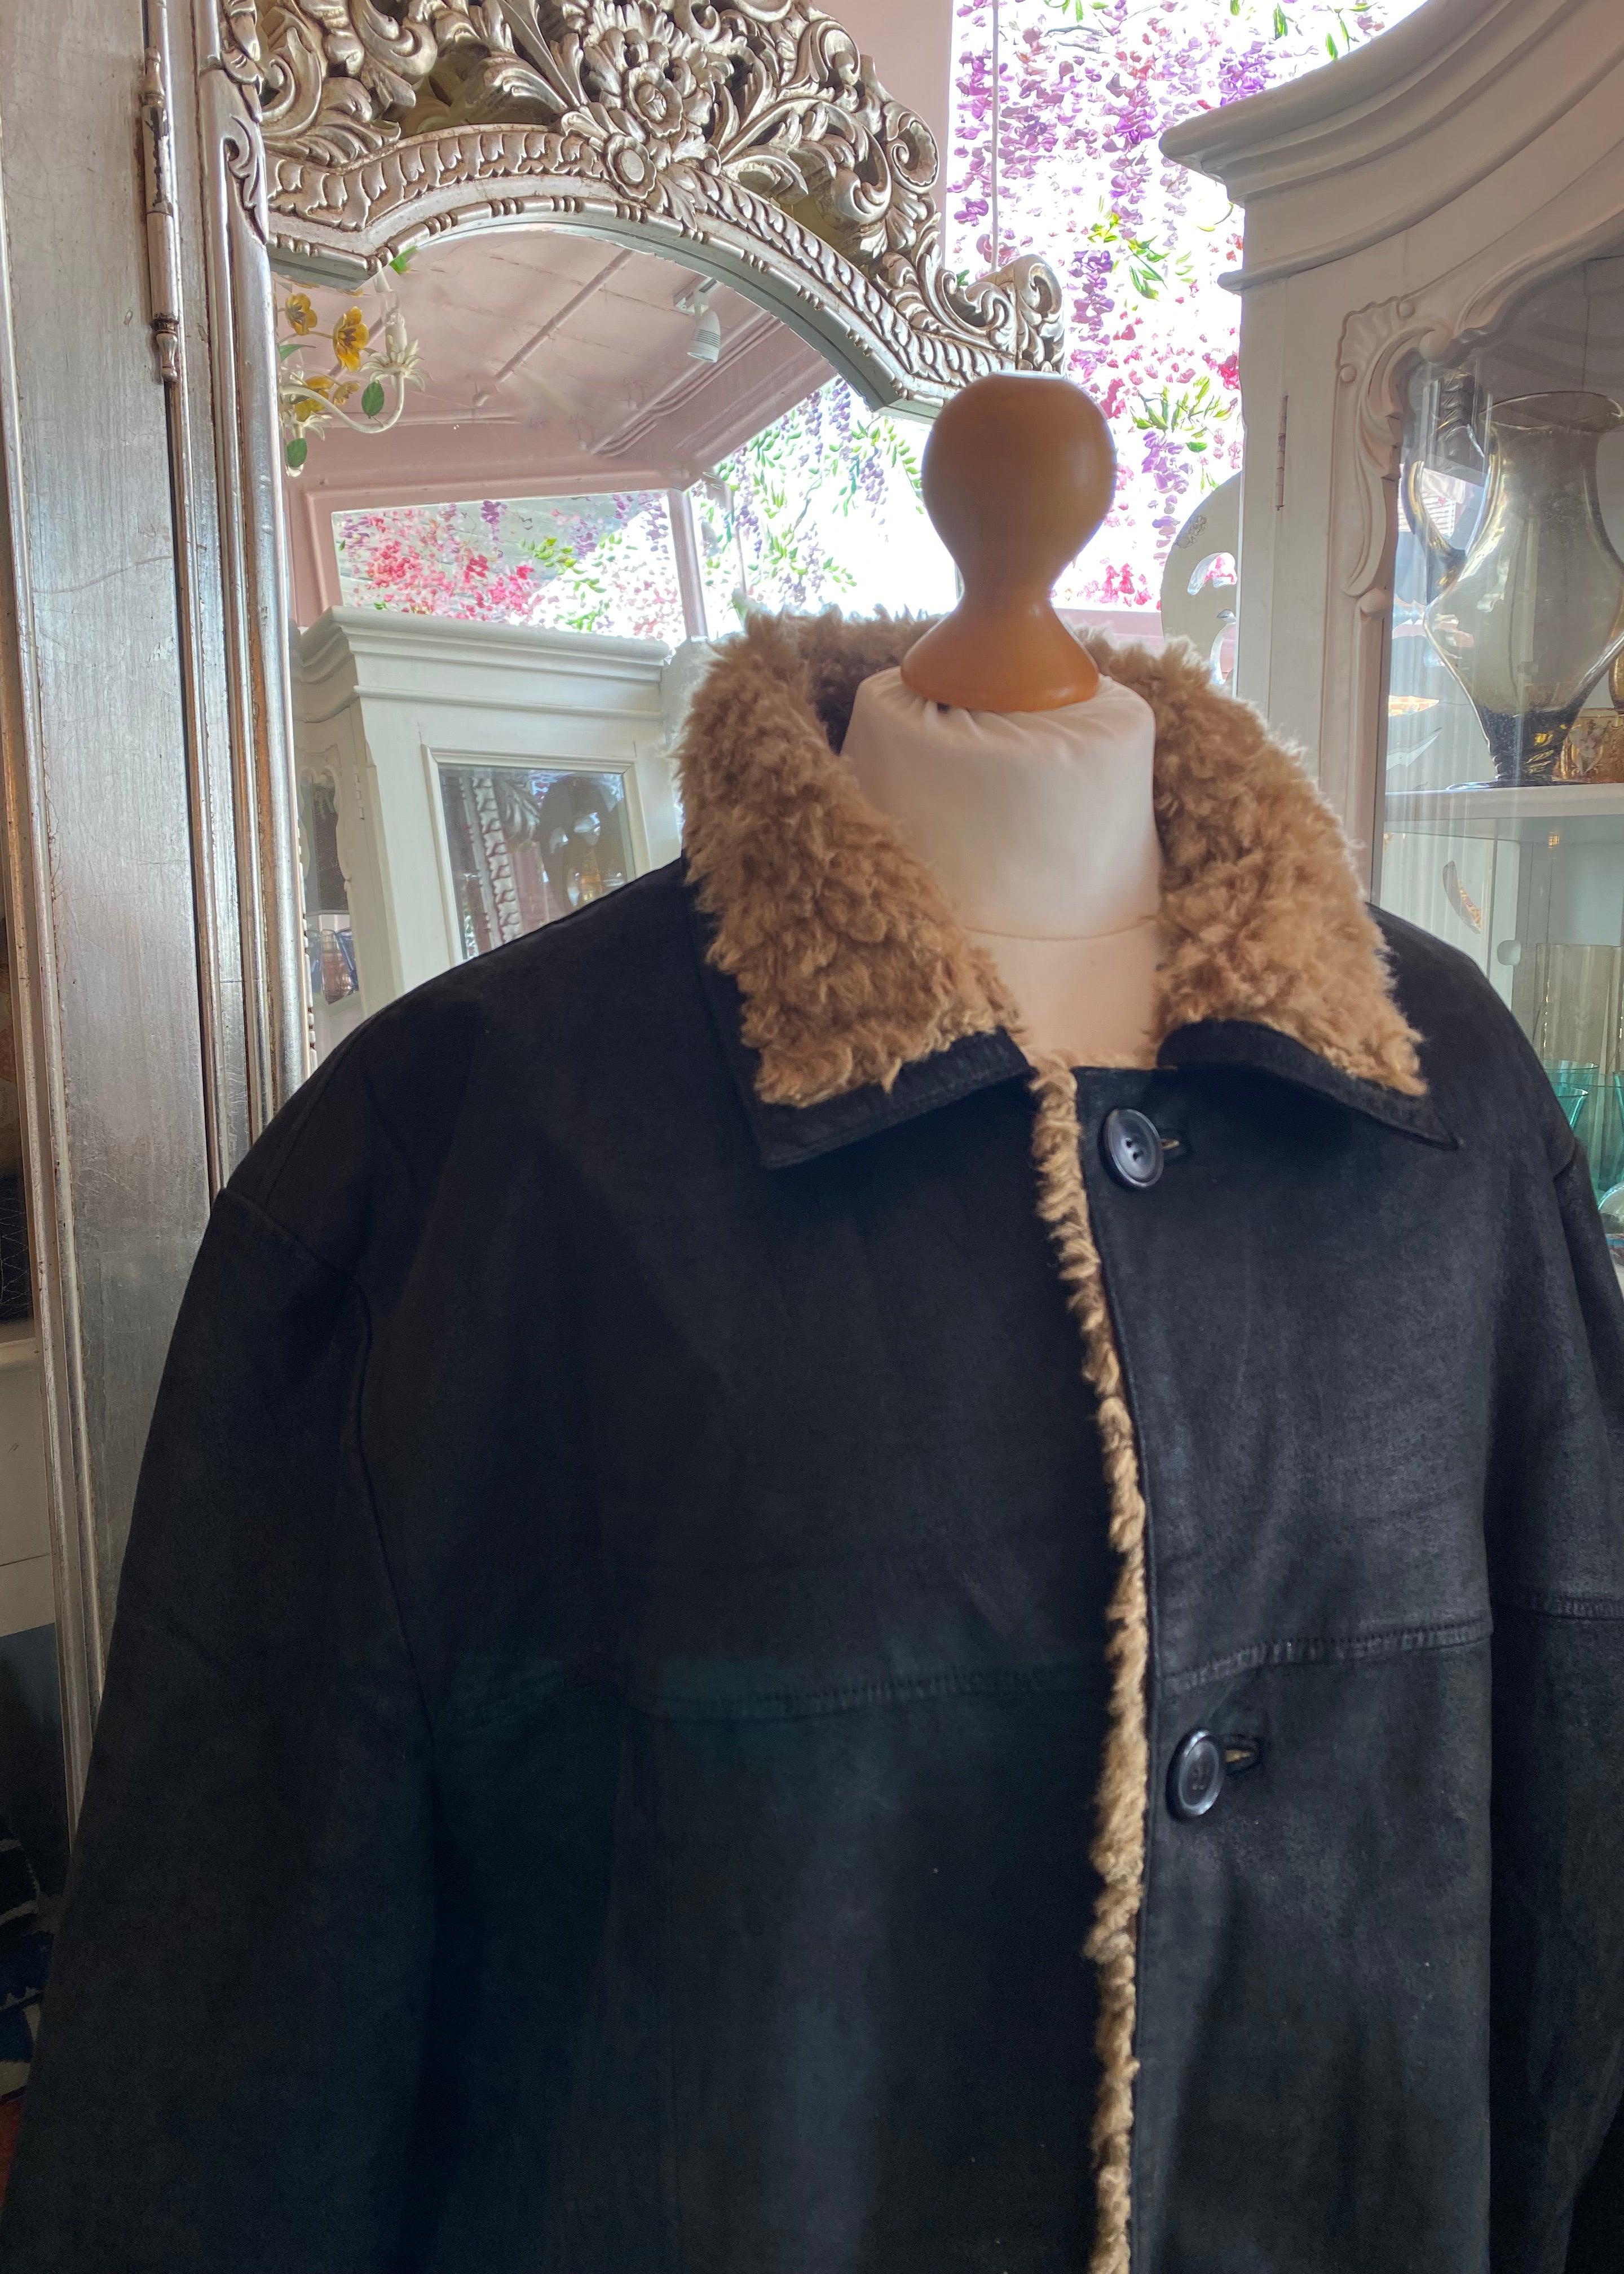 Oversized Straight Ahead Black Leather Sheepskin Lined Coat